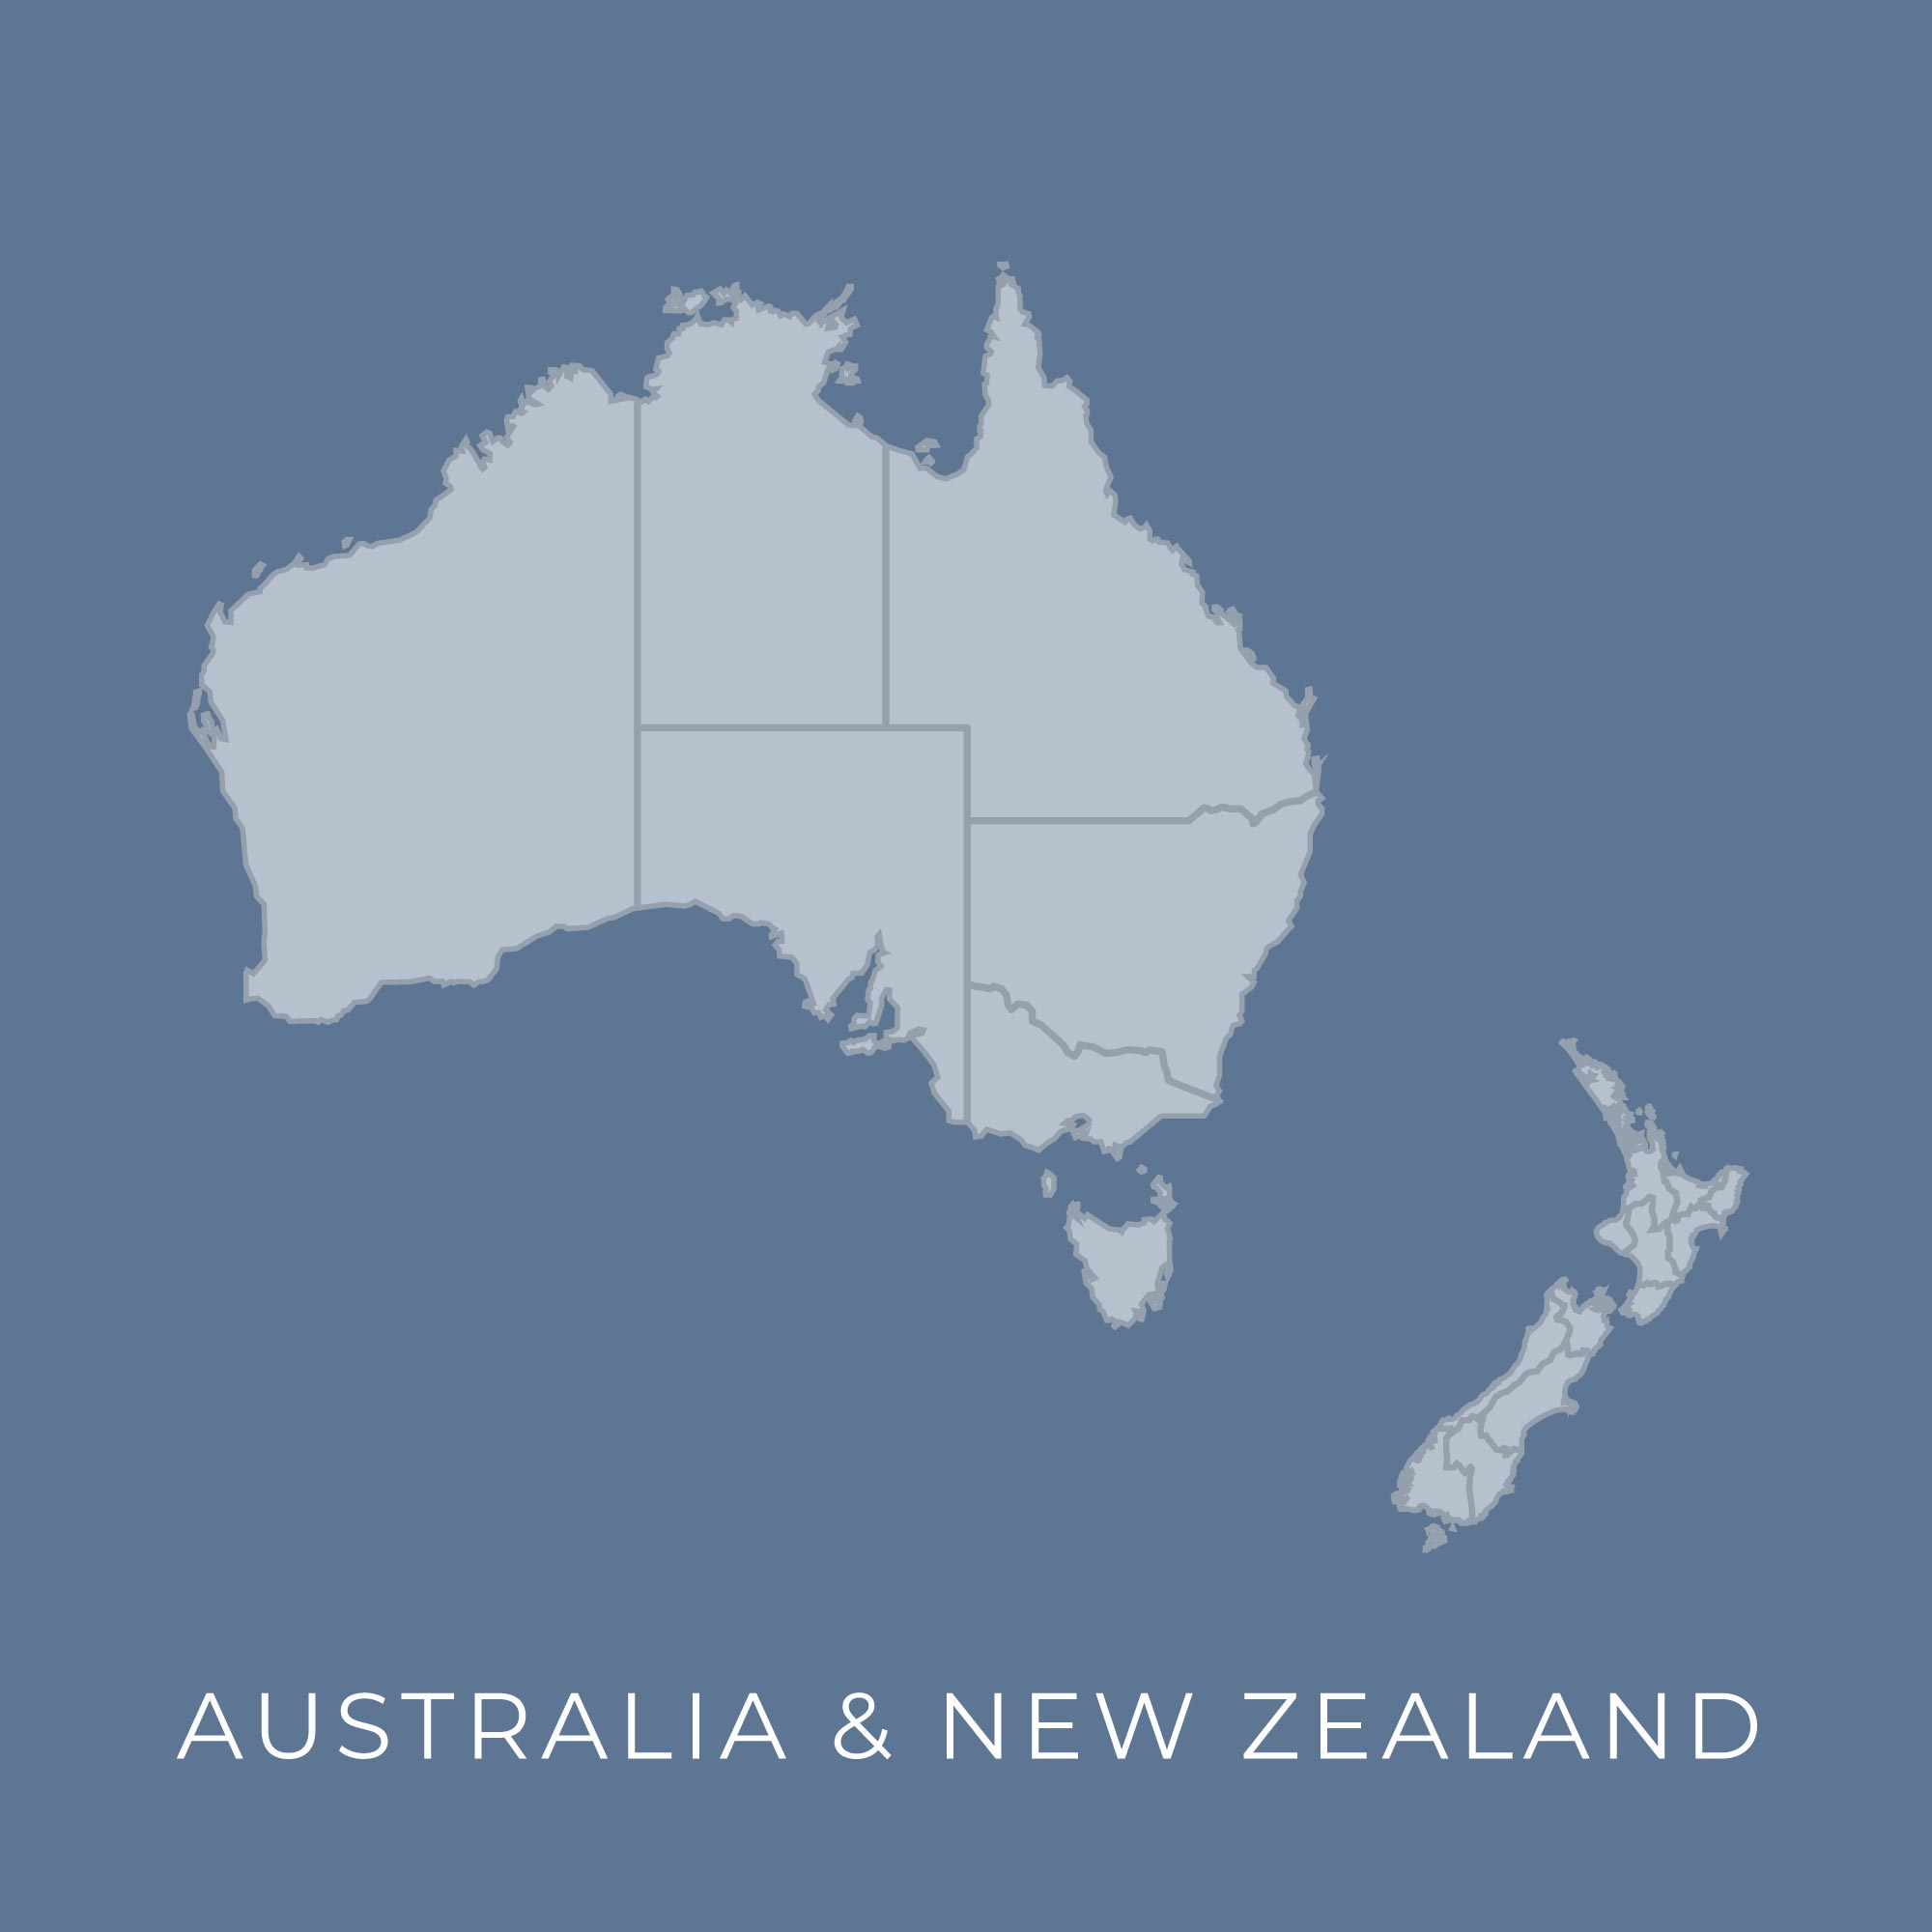 Australia & New Zealand